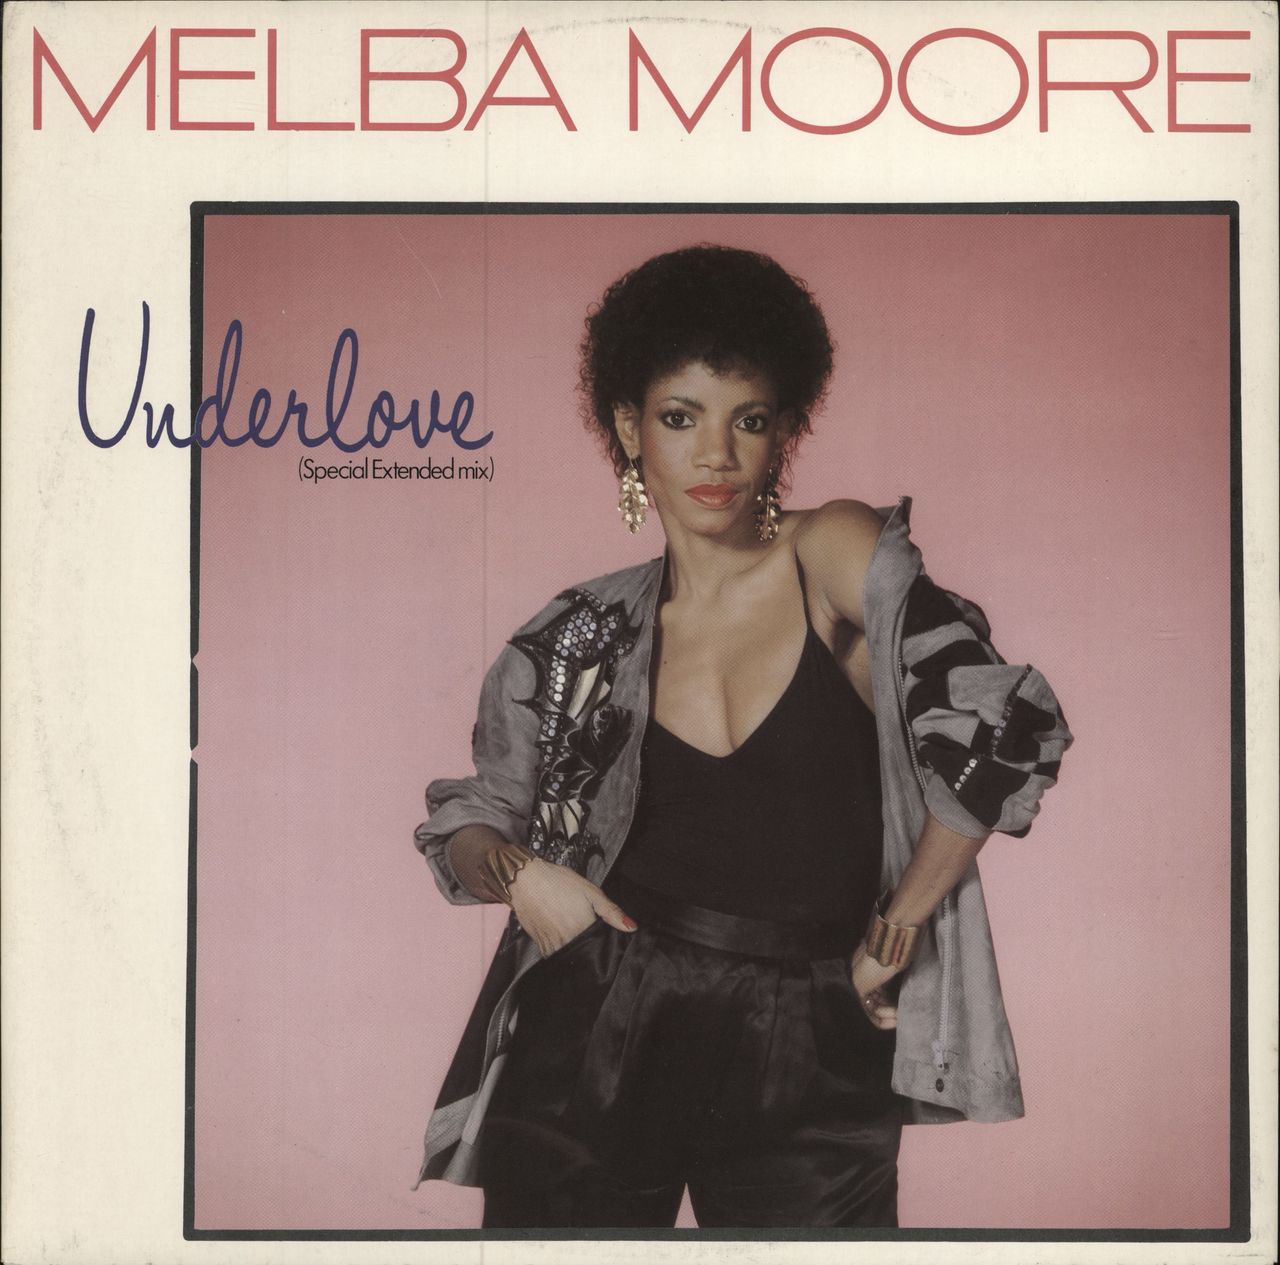 Melba Moore Underlove (Special Extended Mix) UK 12" vinyl single (12 inch record / Maxi-single) 12CL281